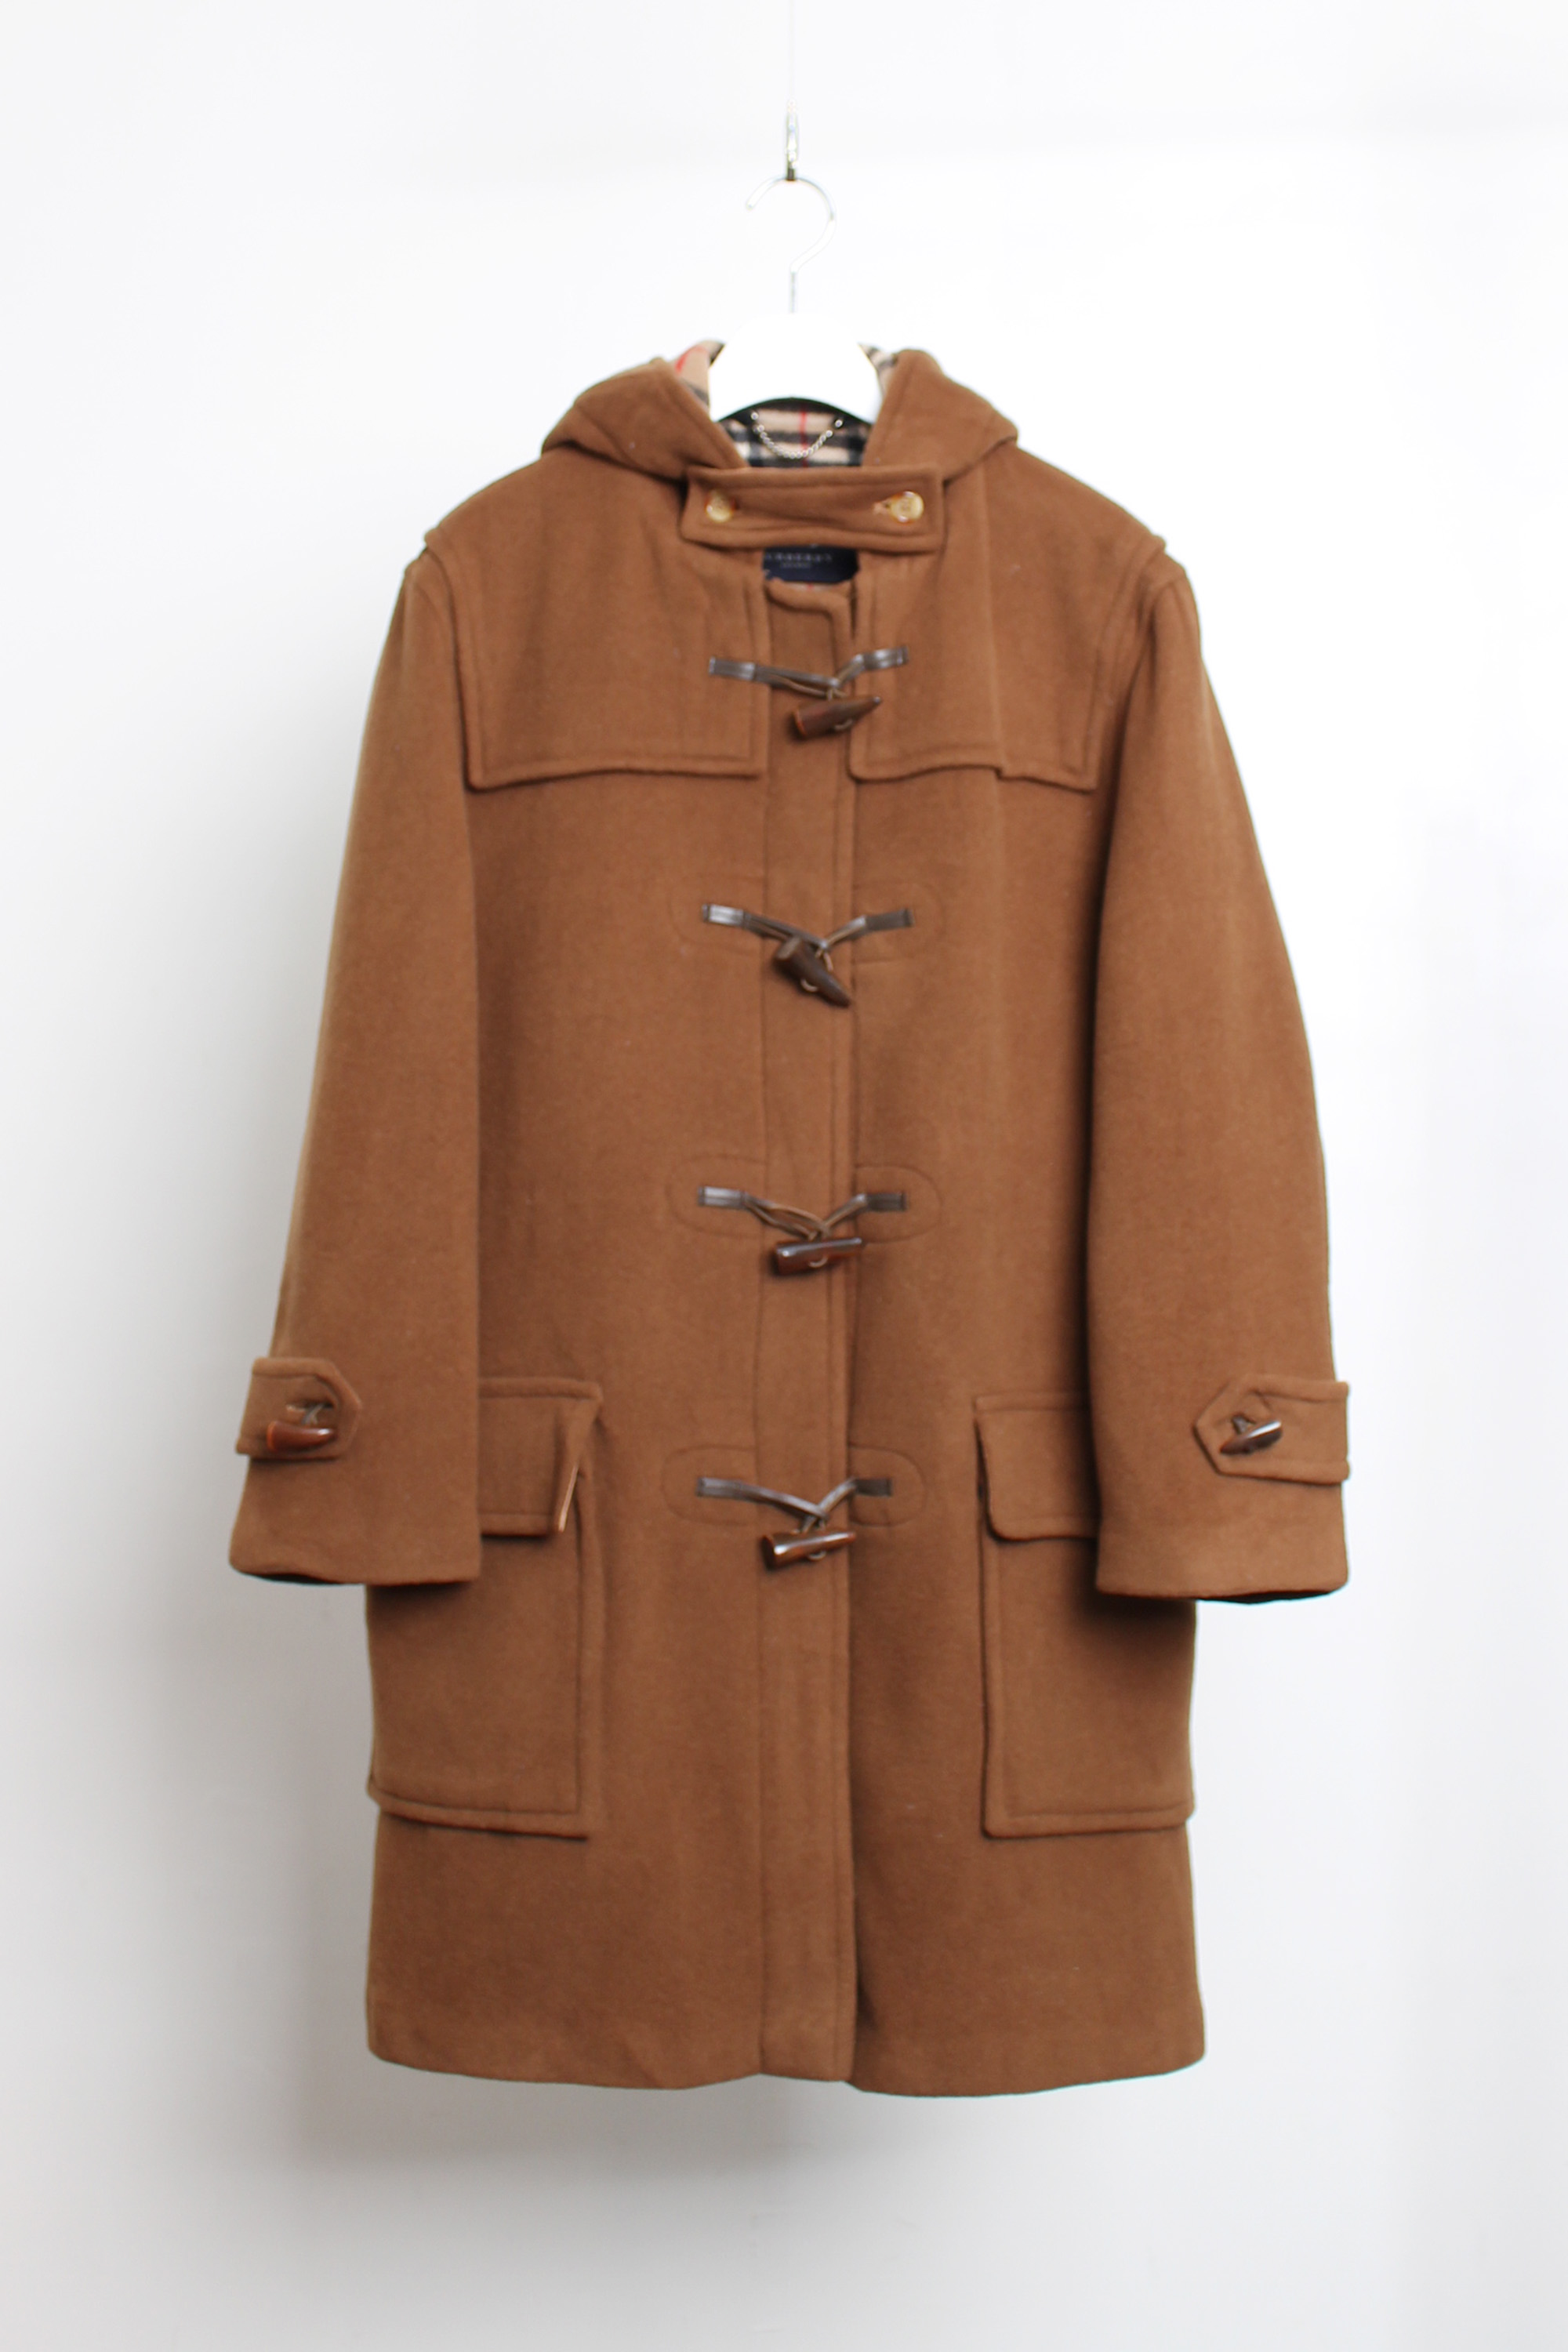 Burberrys duffel coat